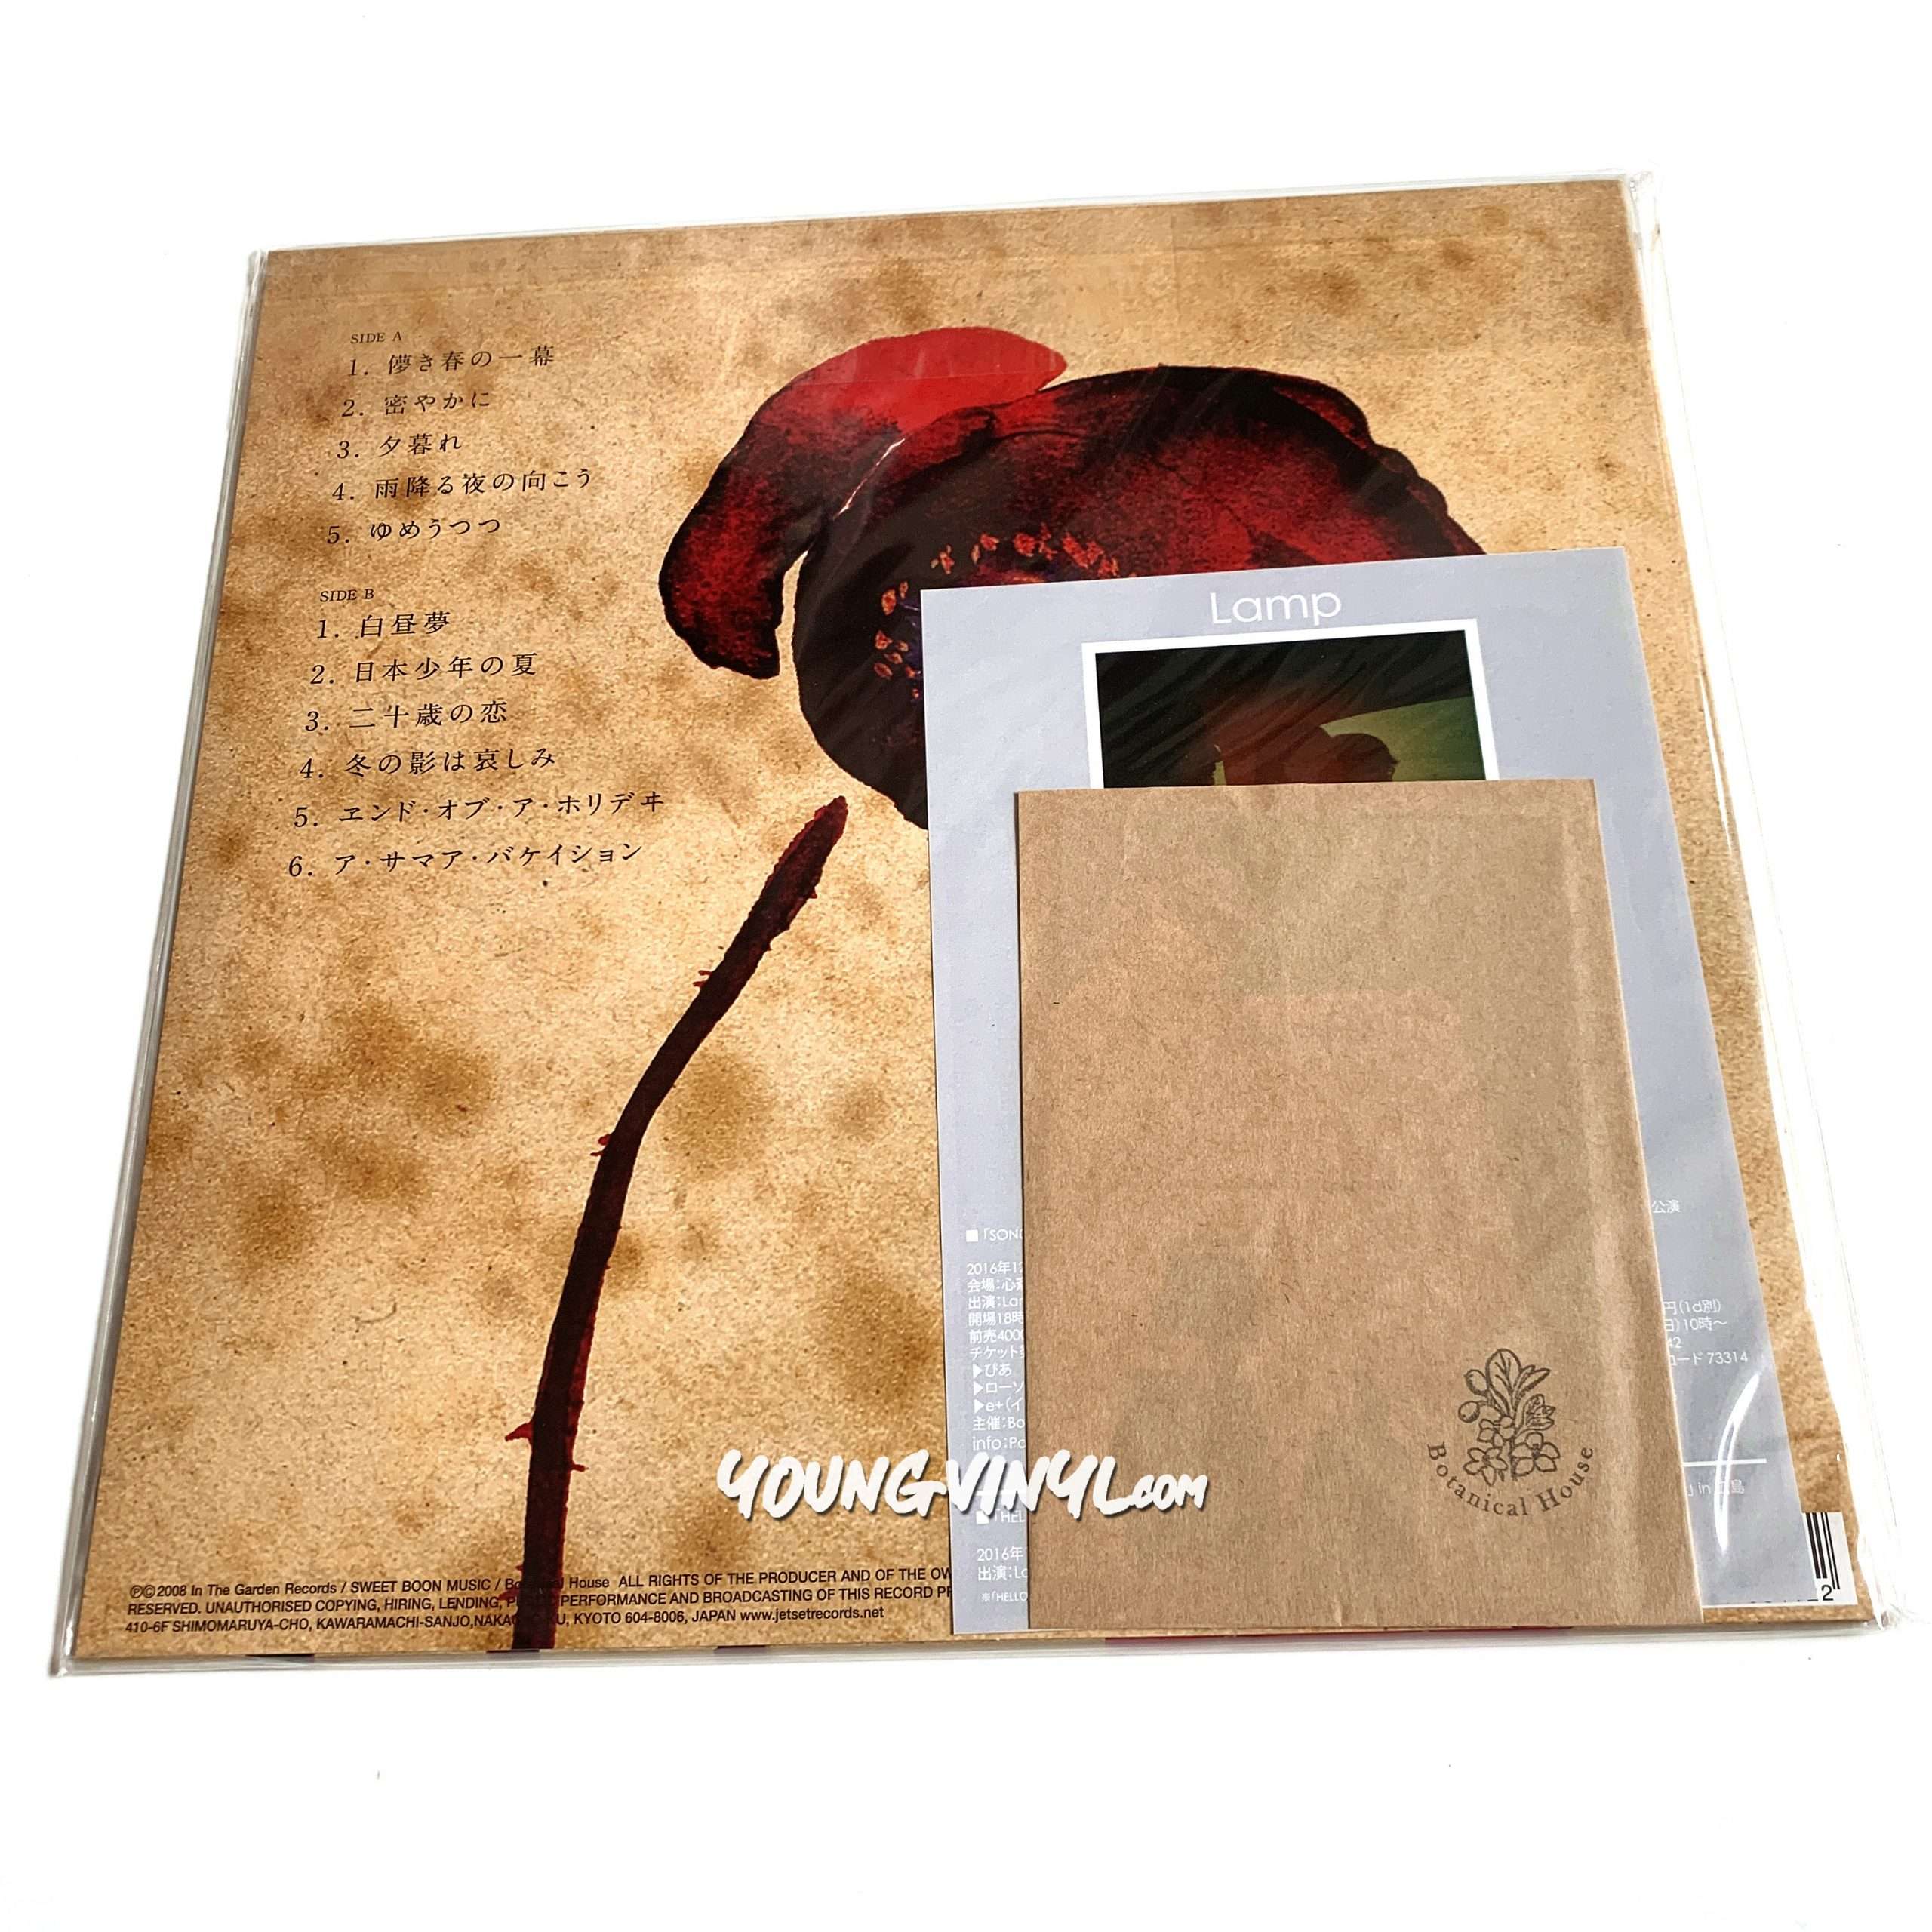 Lamp 幻想 LP - レコード